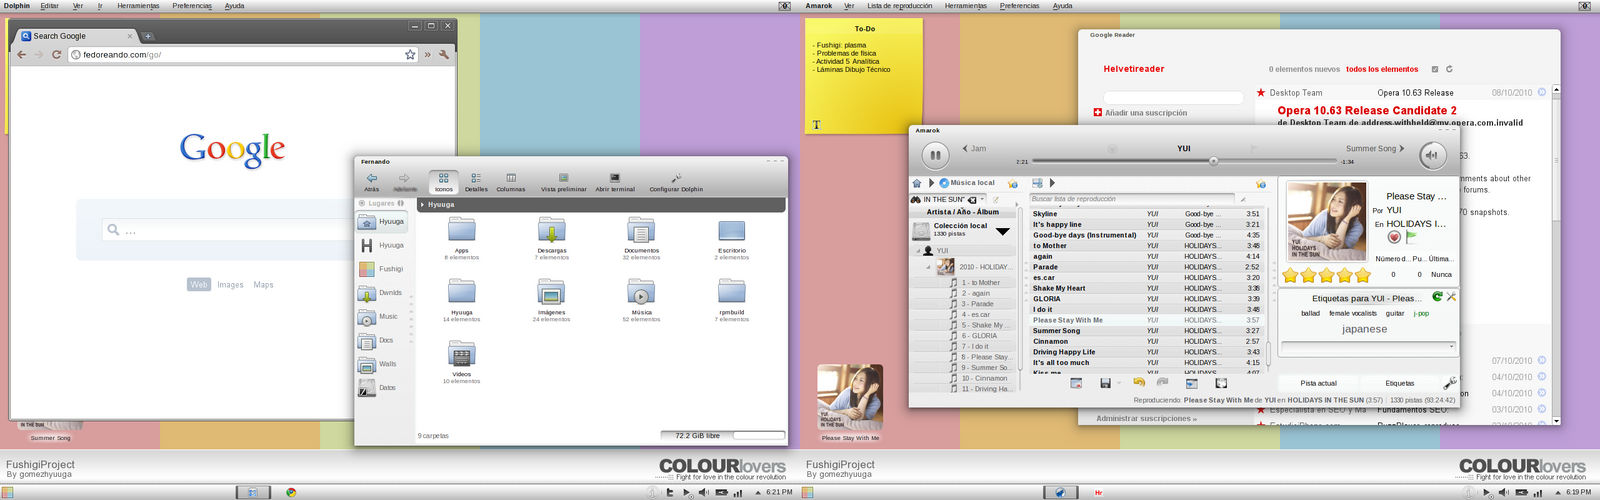 Desktop 09.10.10